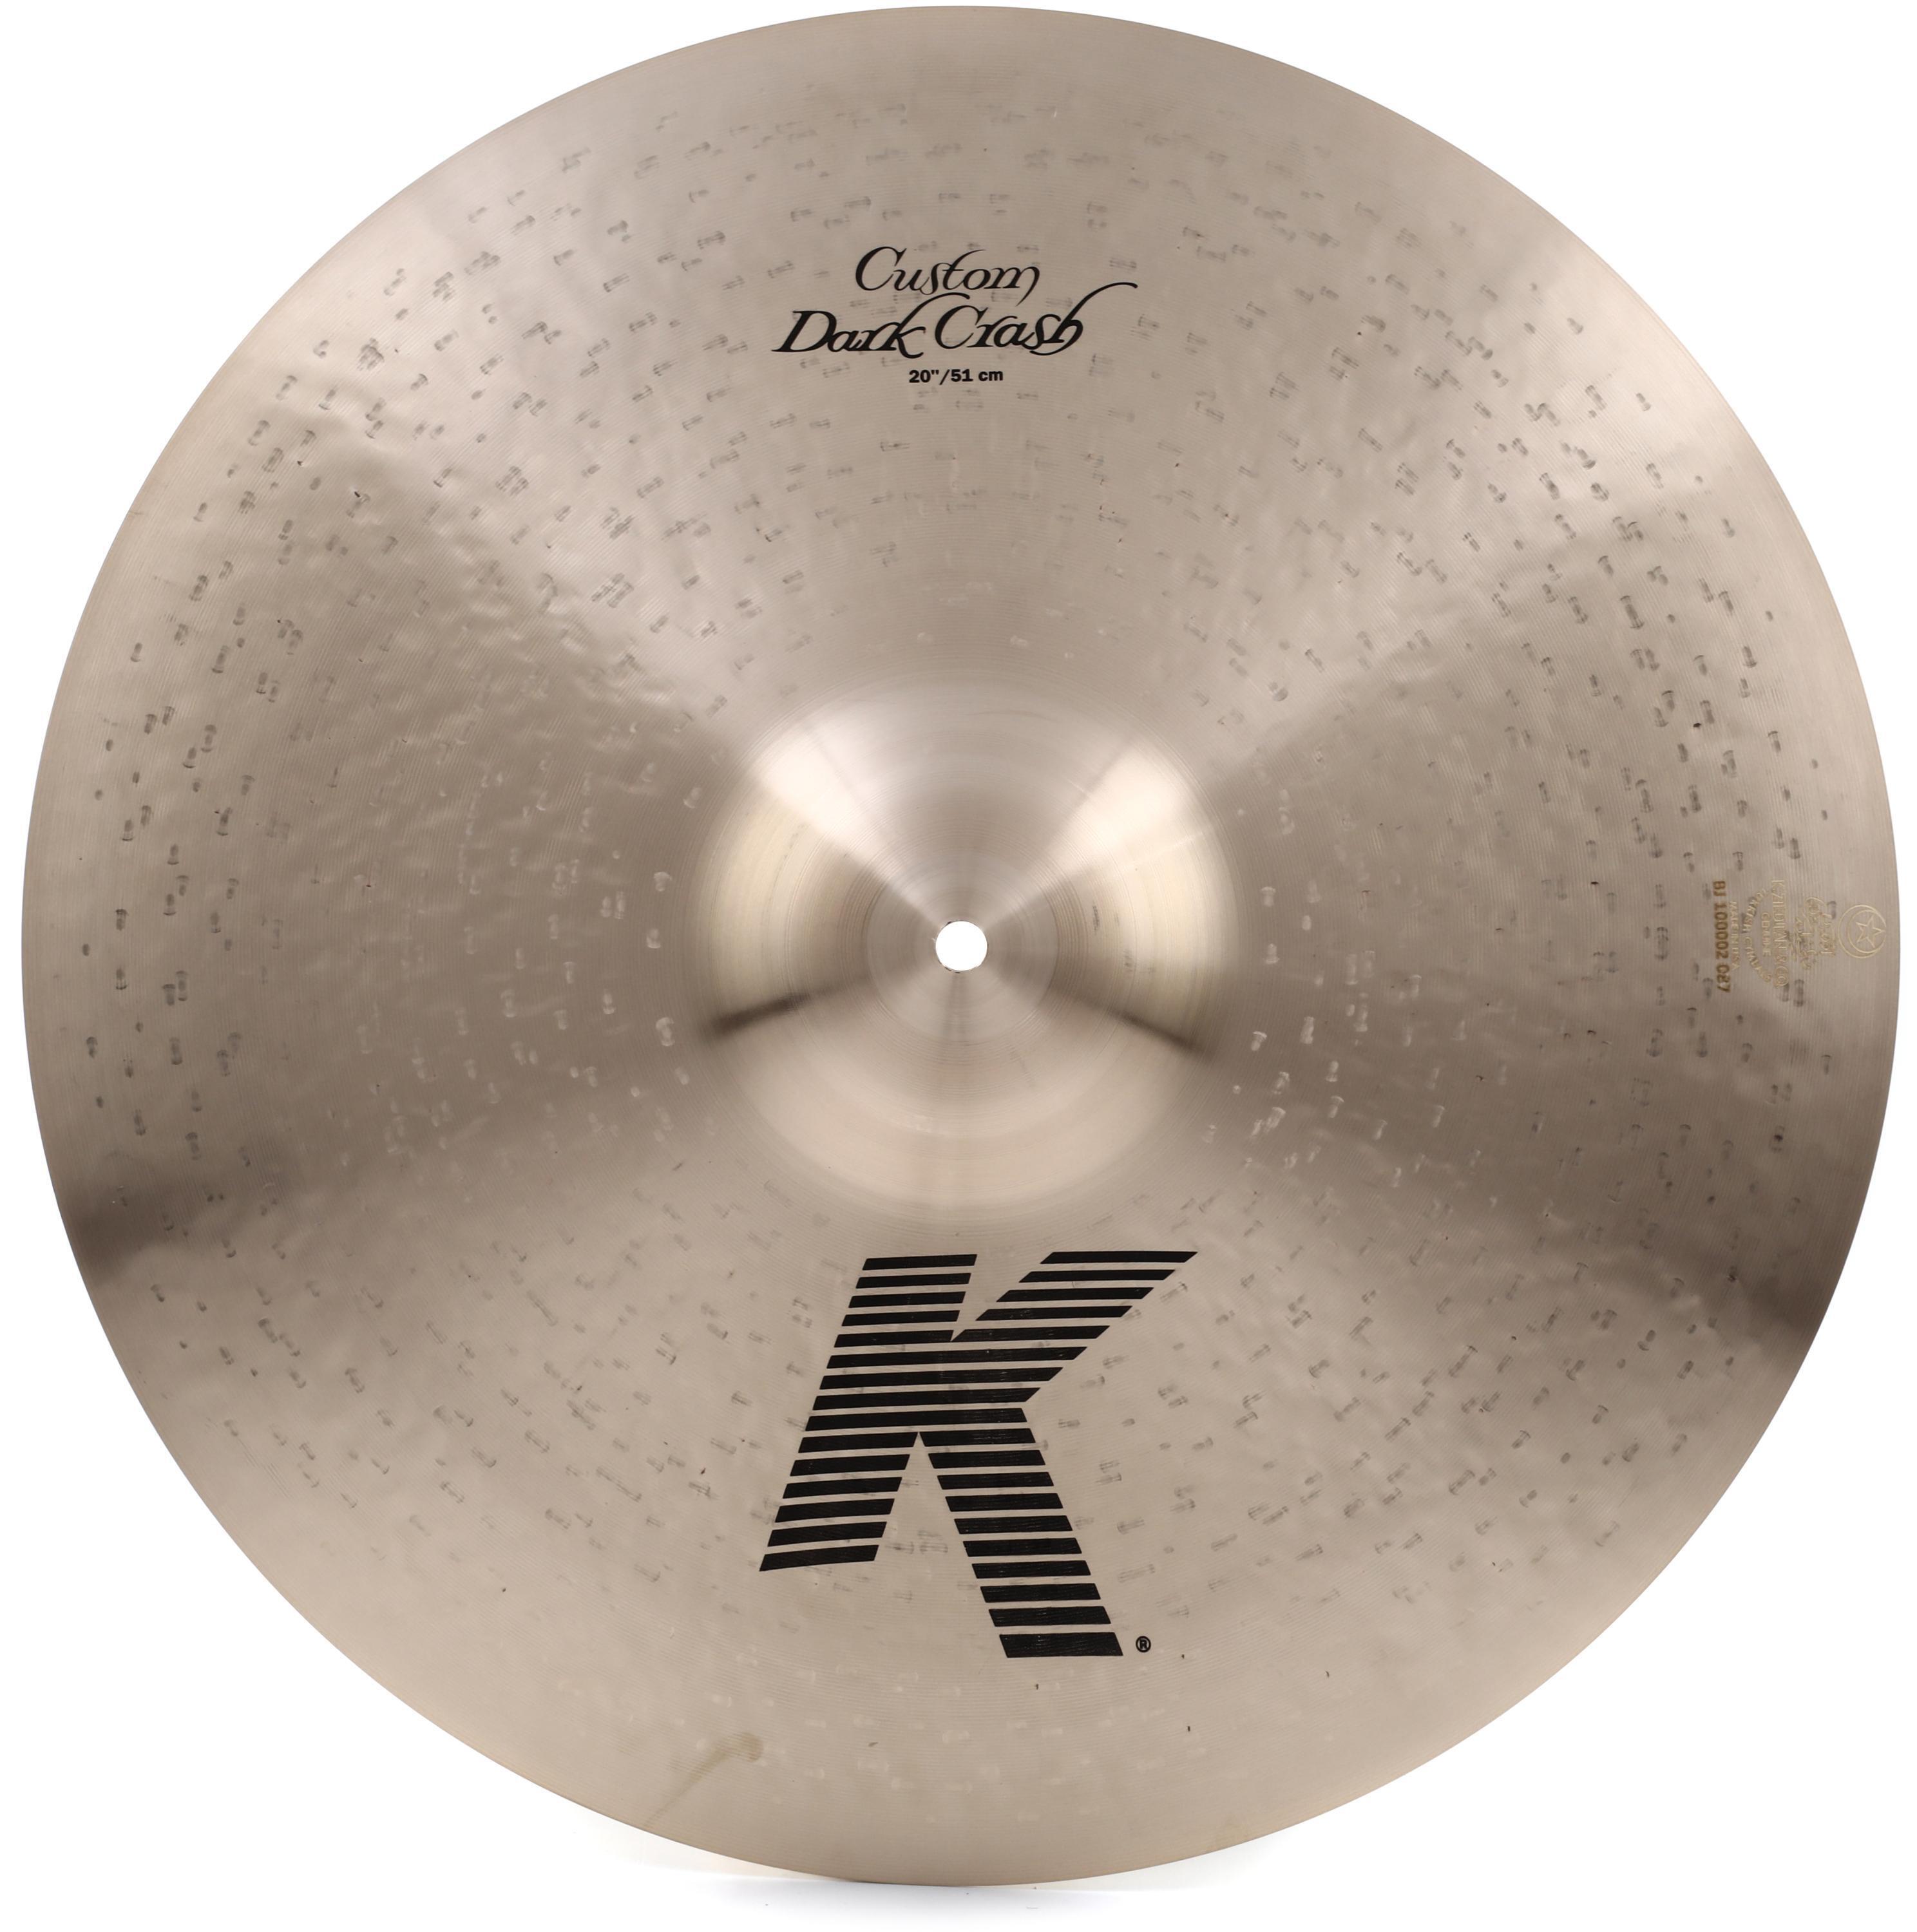 Zildjian 18 inch K Constantinople Crash Cymbal | Sweetwater